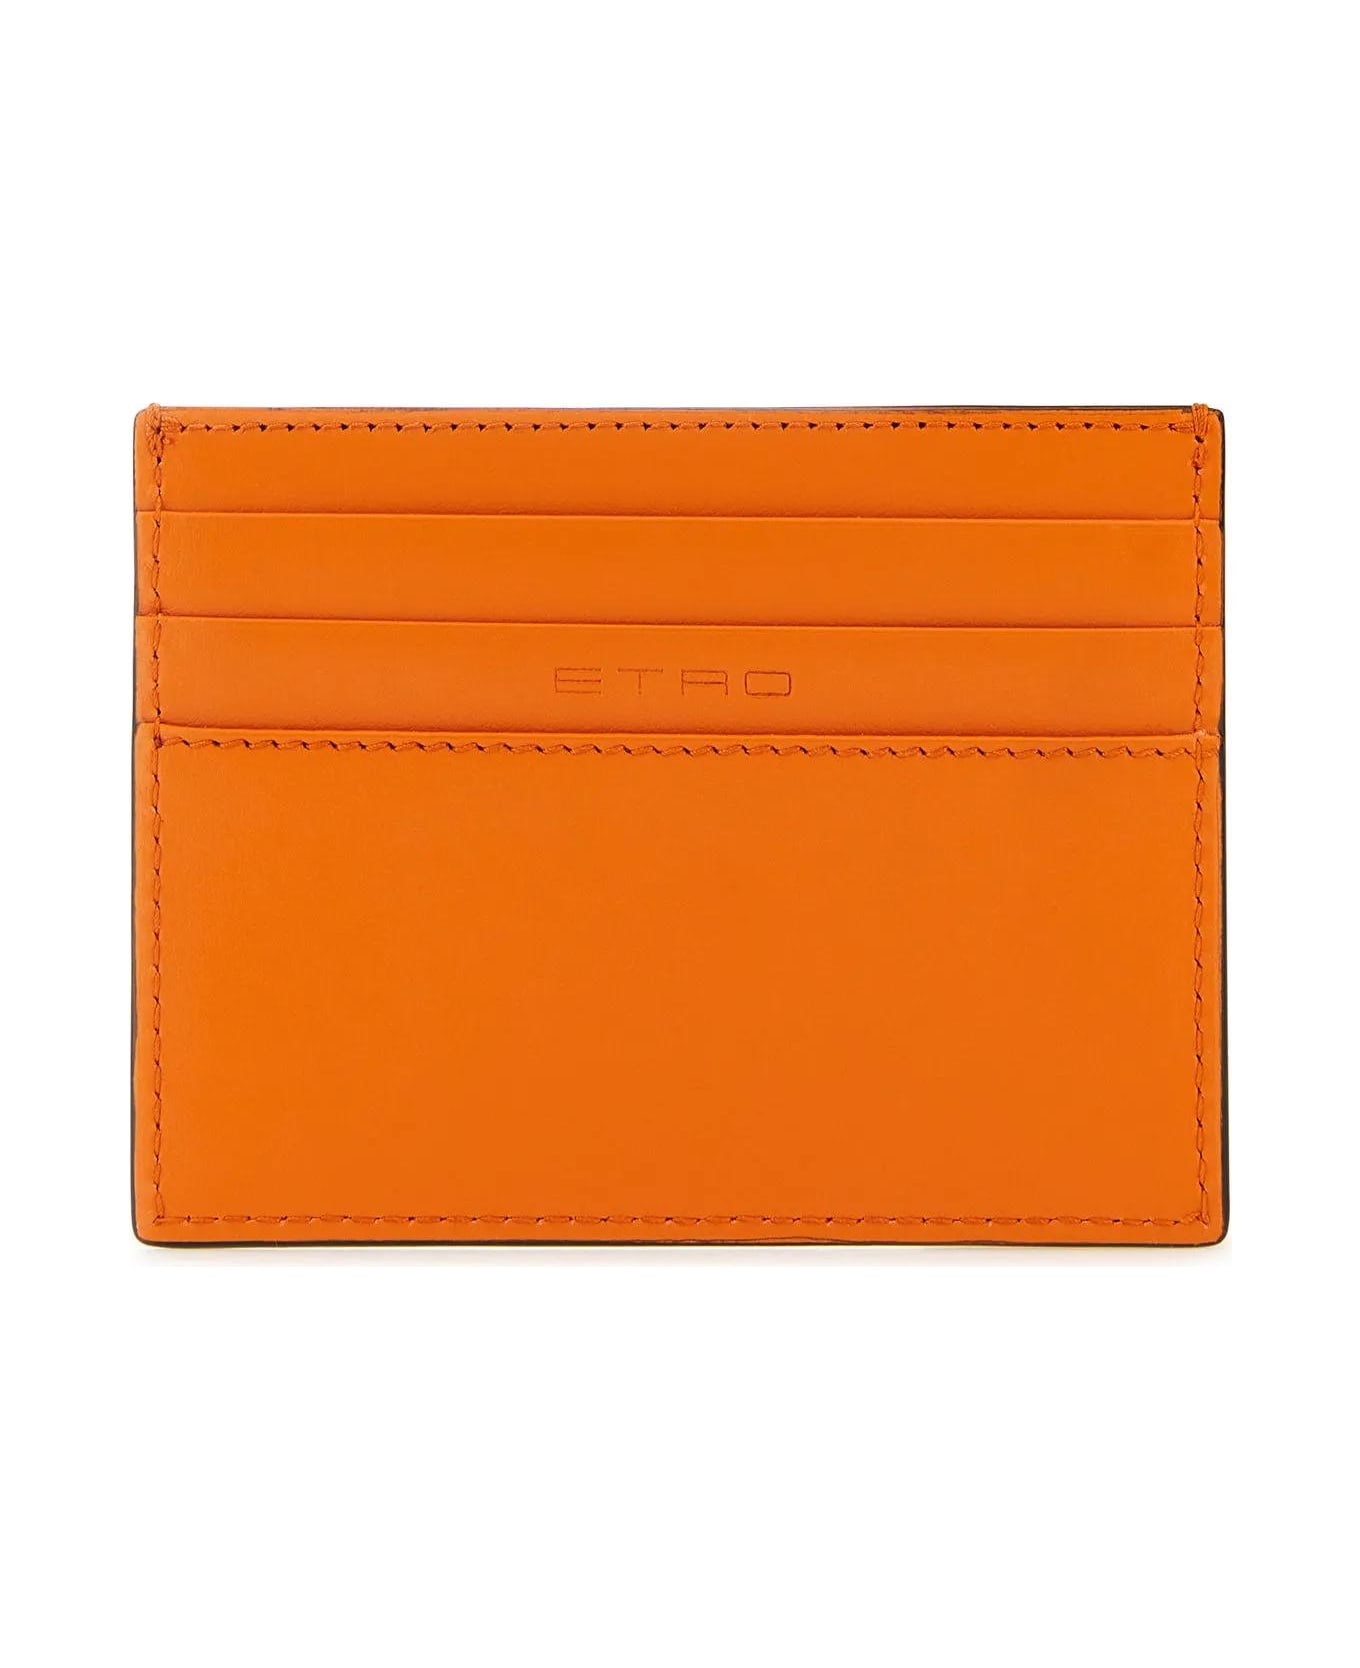 Etro Orange Leather Cardholder - Orange